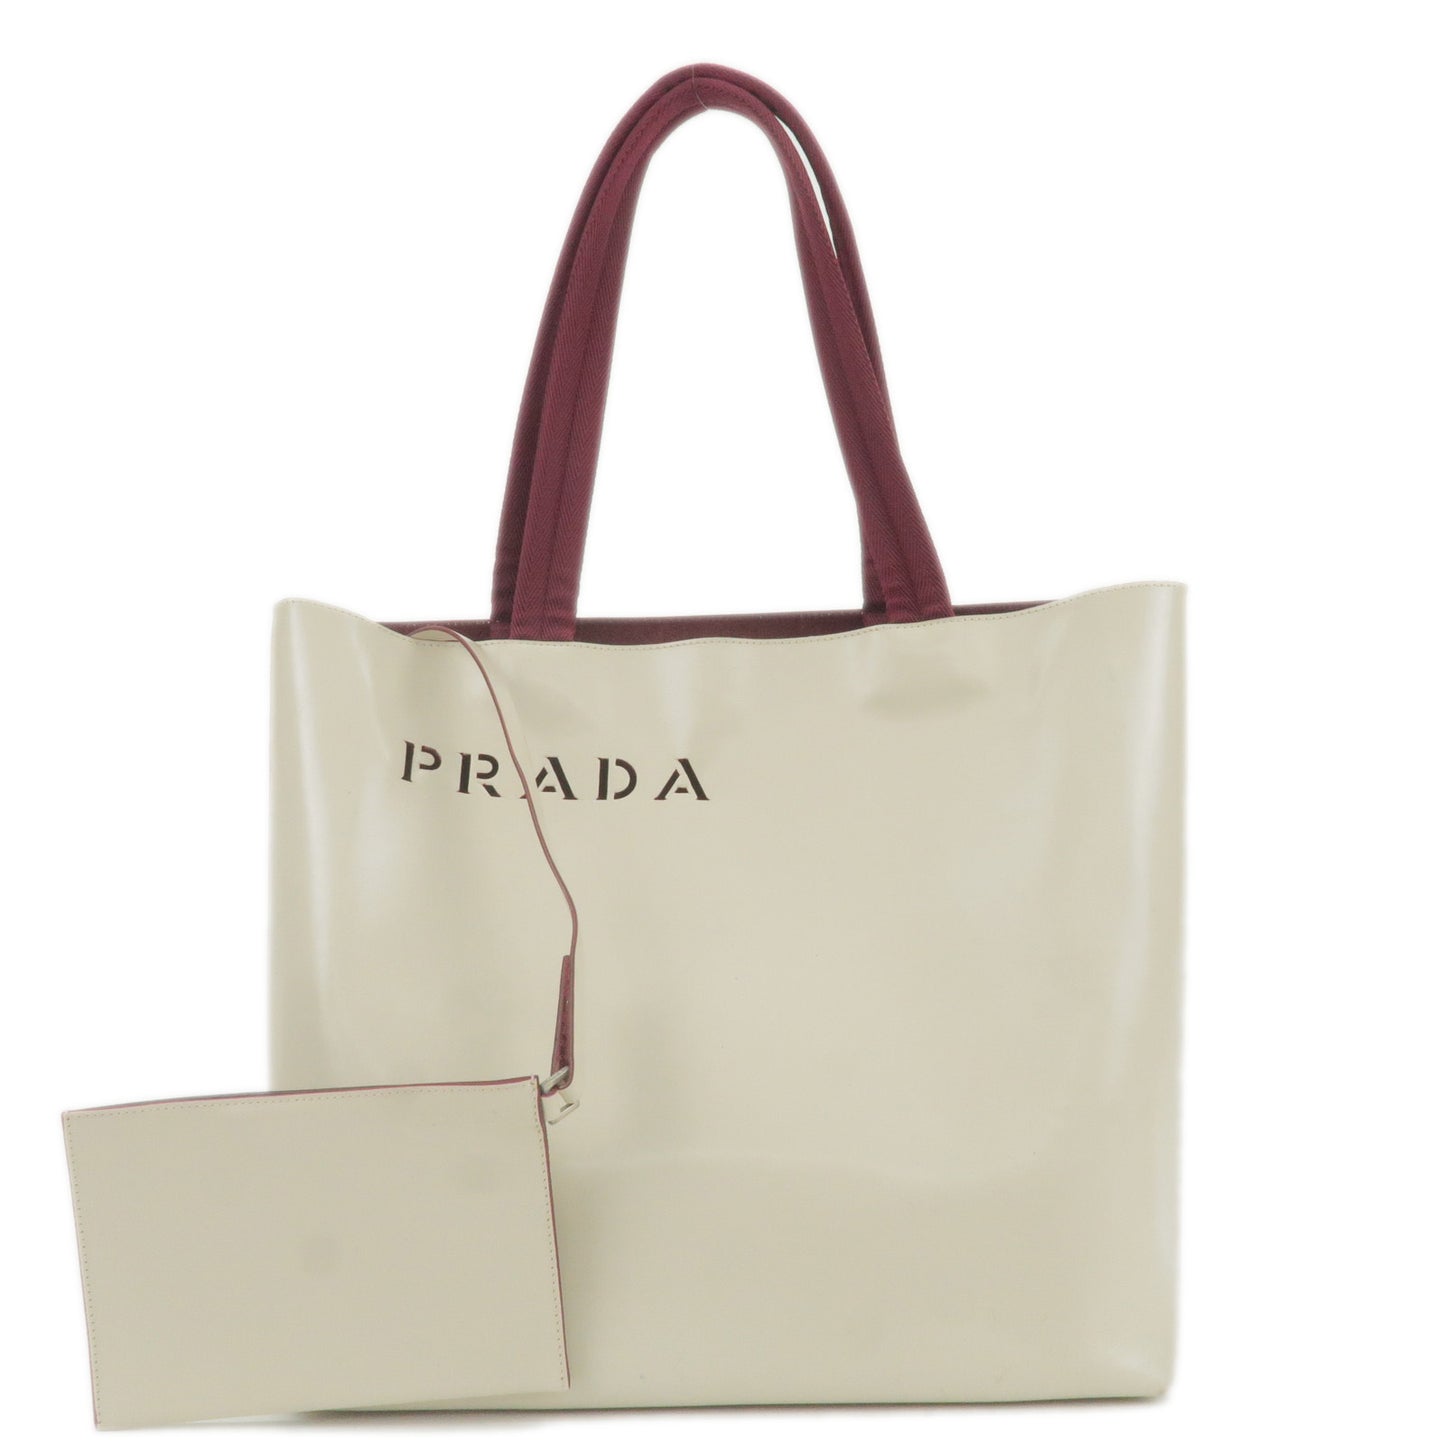 PRADA-Leather-Canvas-Tote-Bag-Hand-Bag-Greige-Red-Wine-B10189